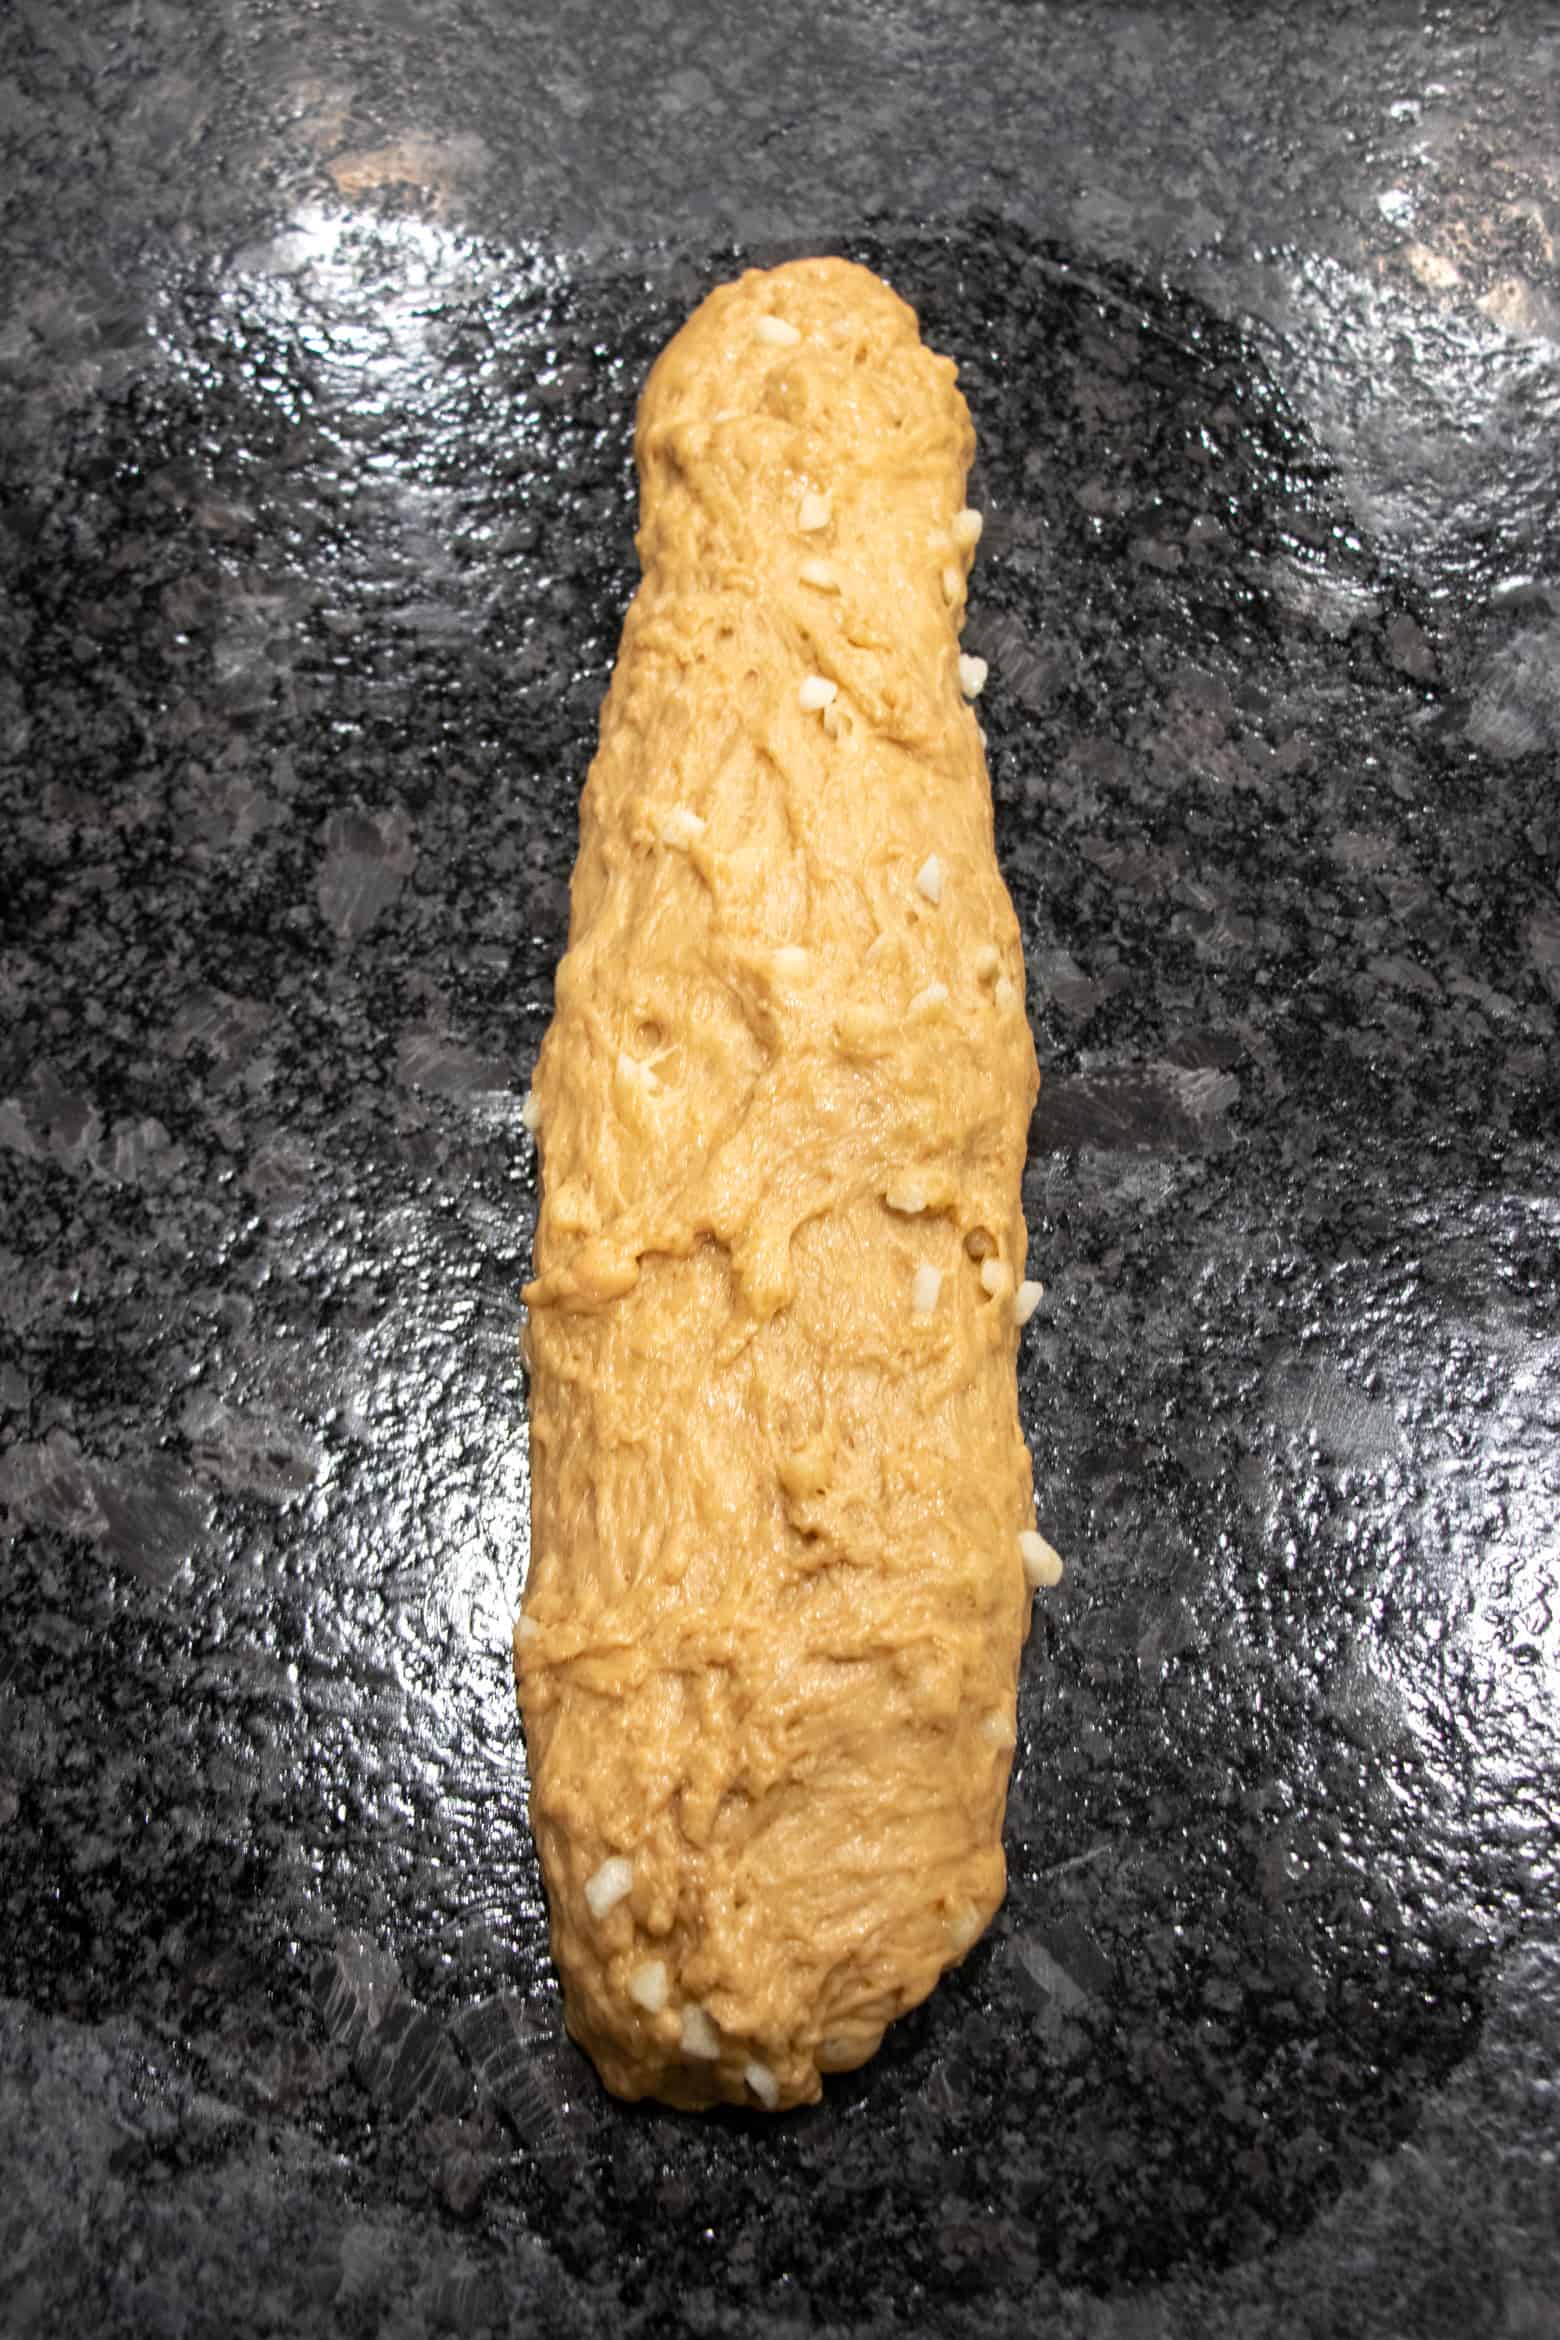 liege dough rolled into a log shape.